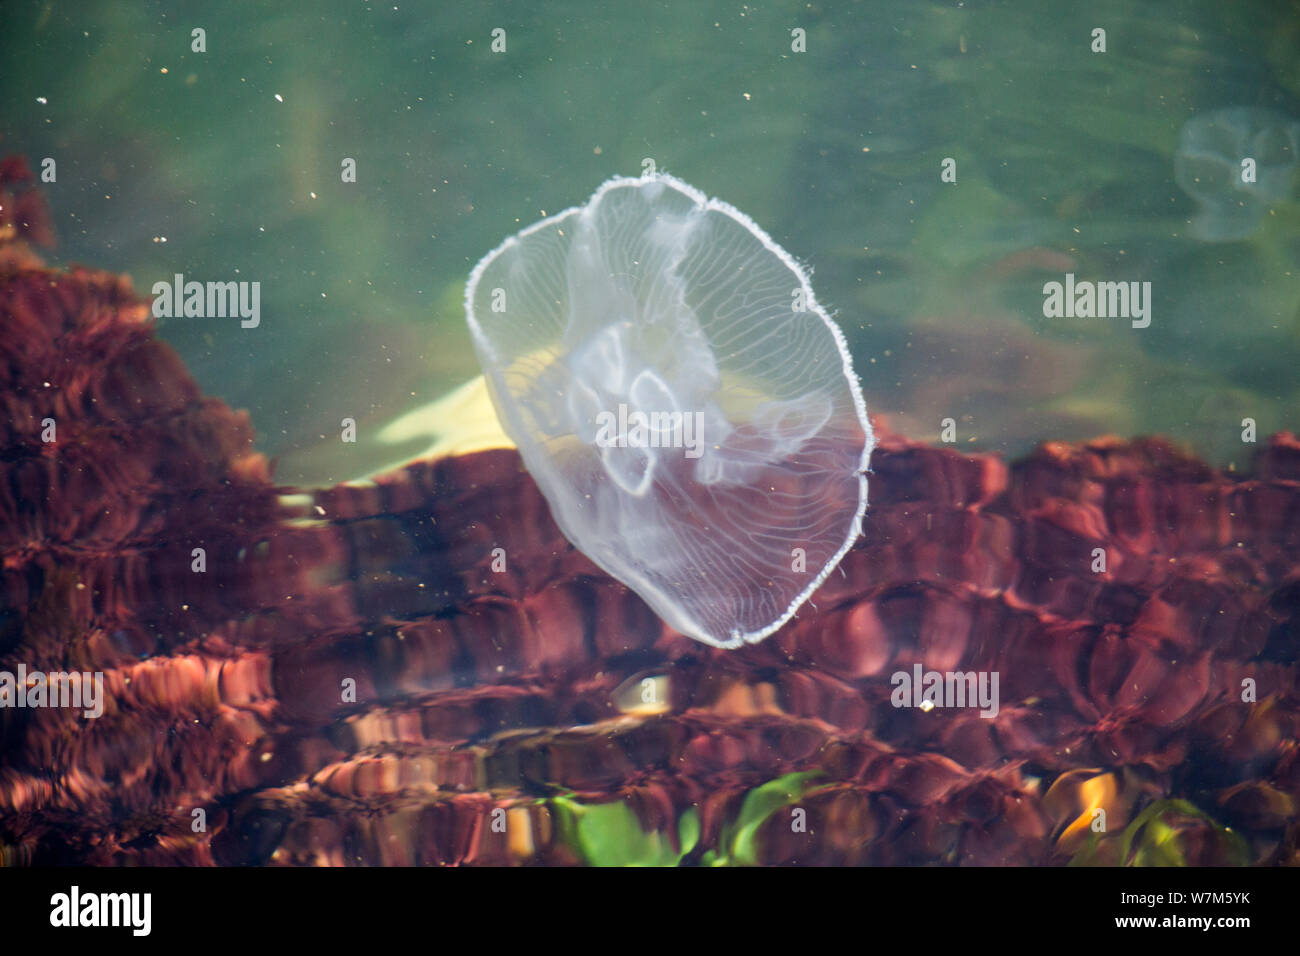 Transparent white jellyfish in a glass aquarium tank Stock Photo